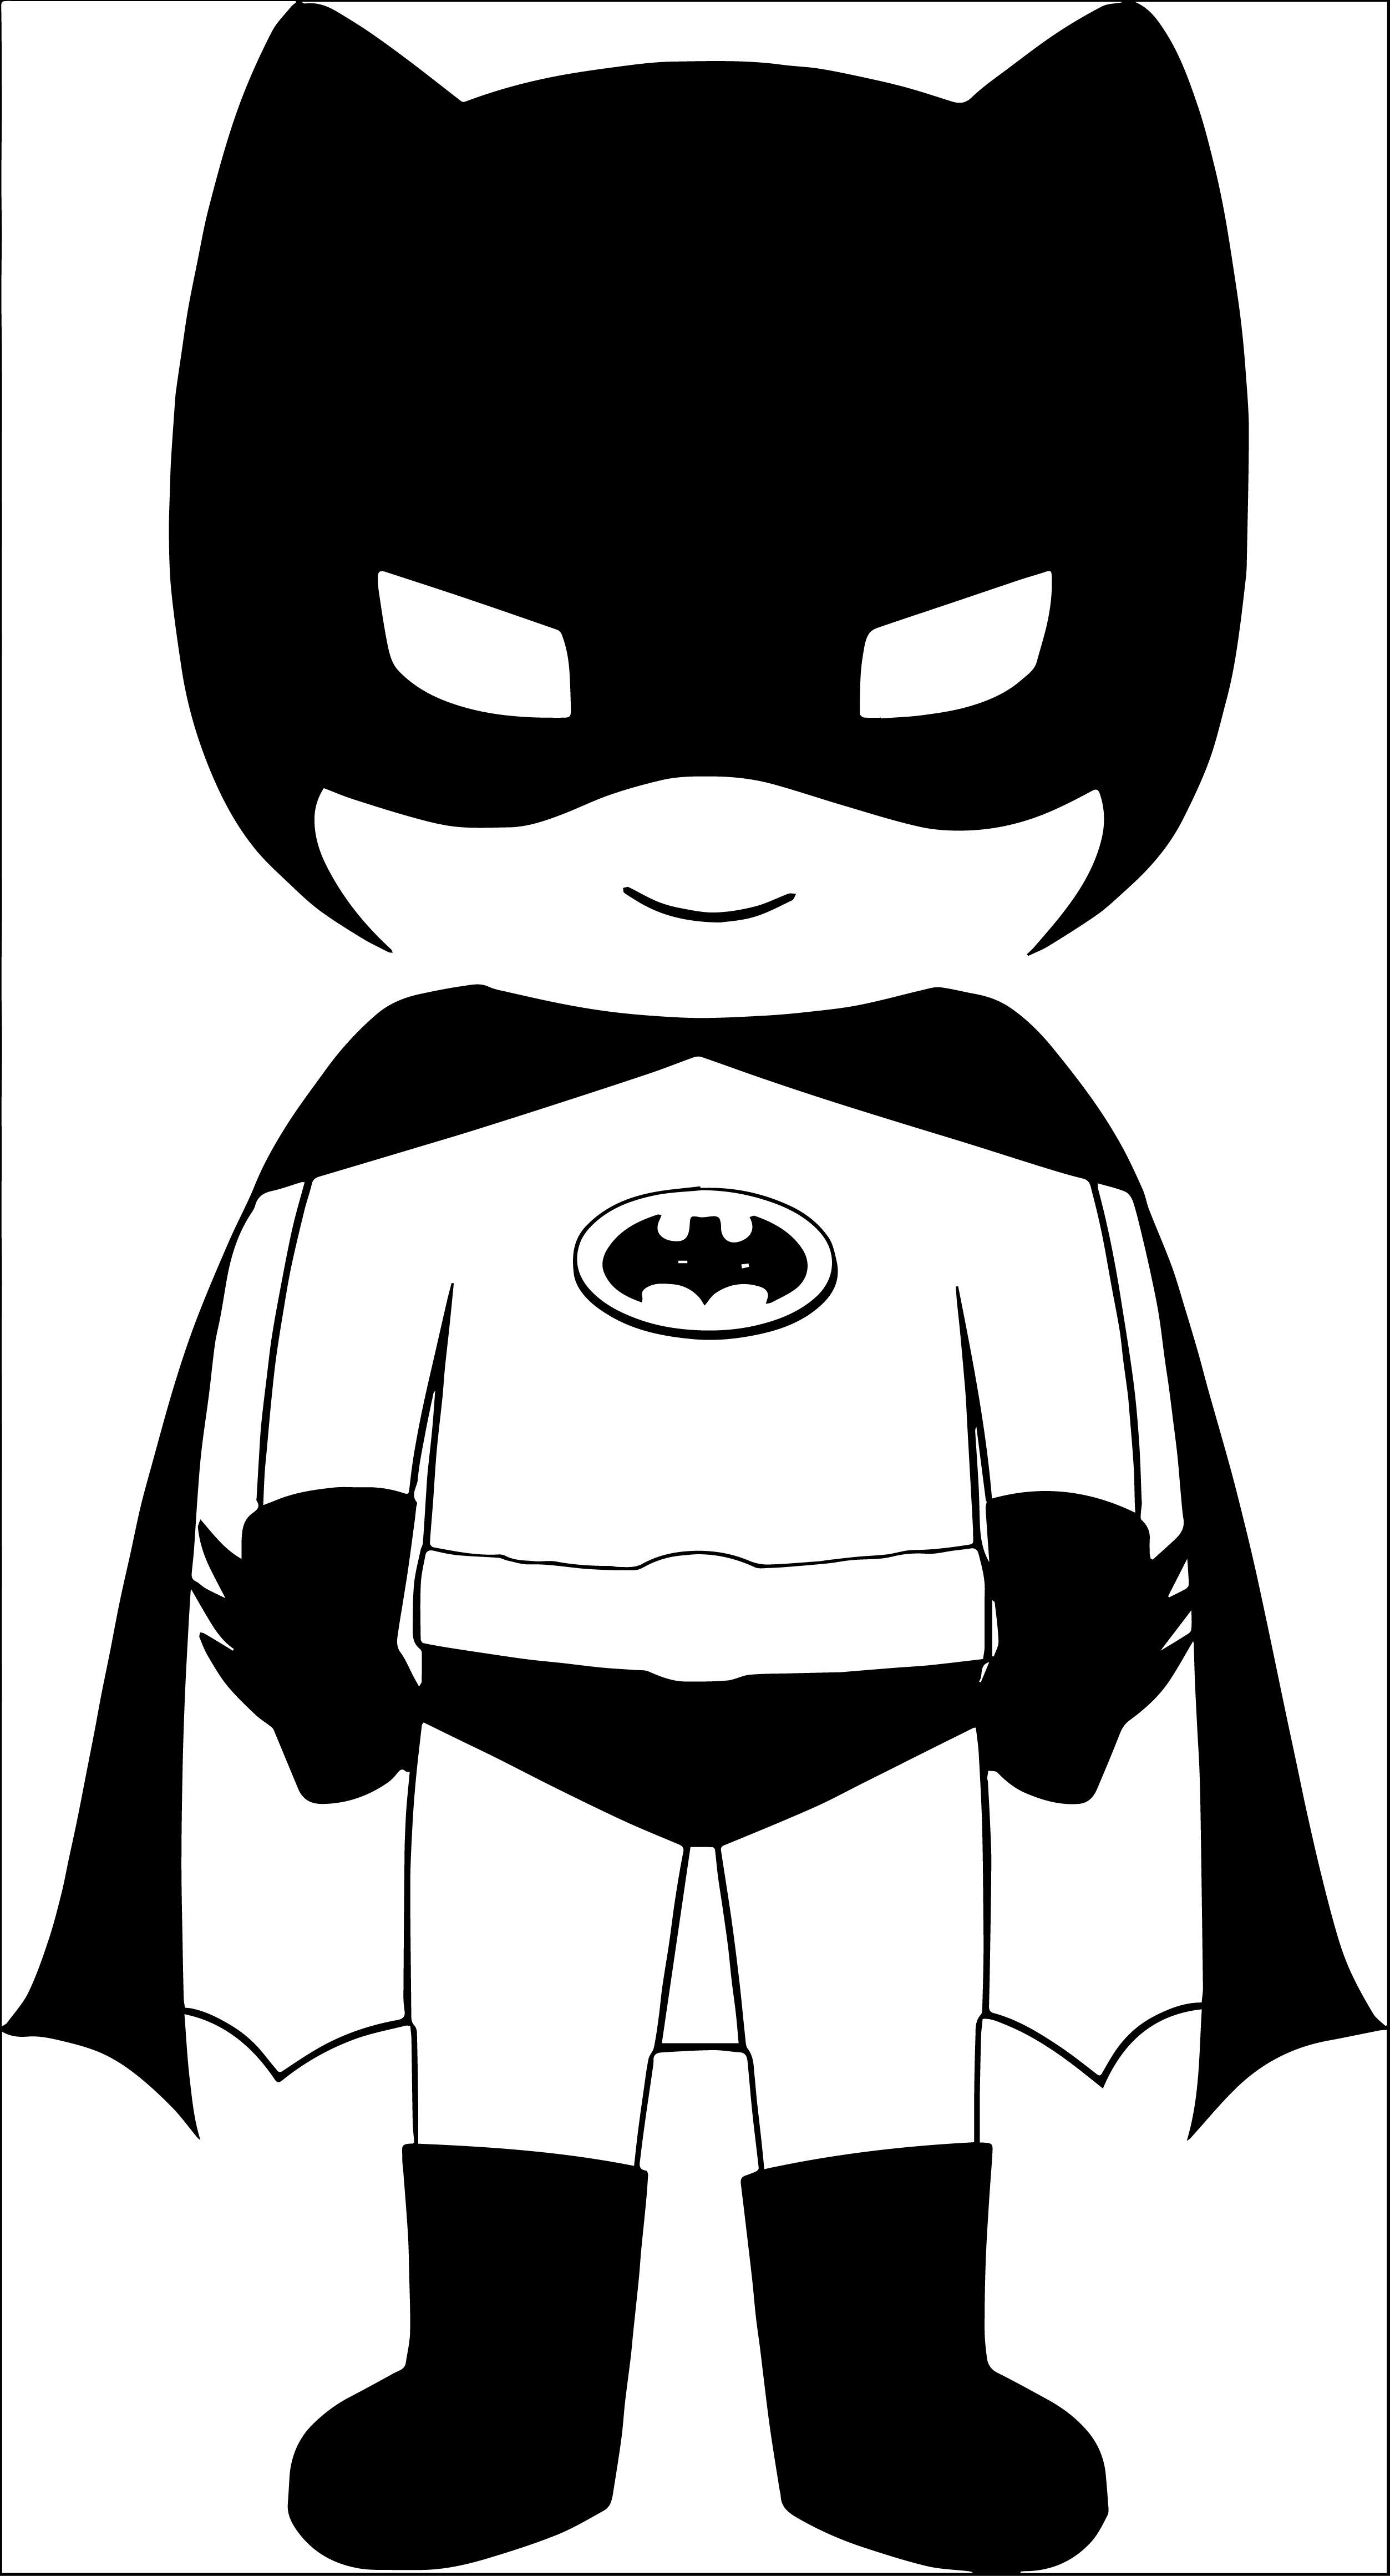 Batman Clipart Black And White.